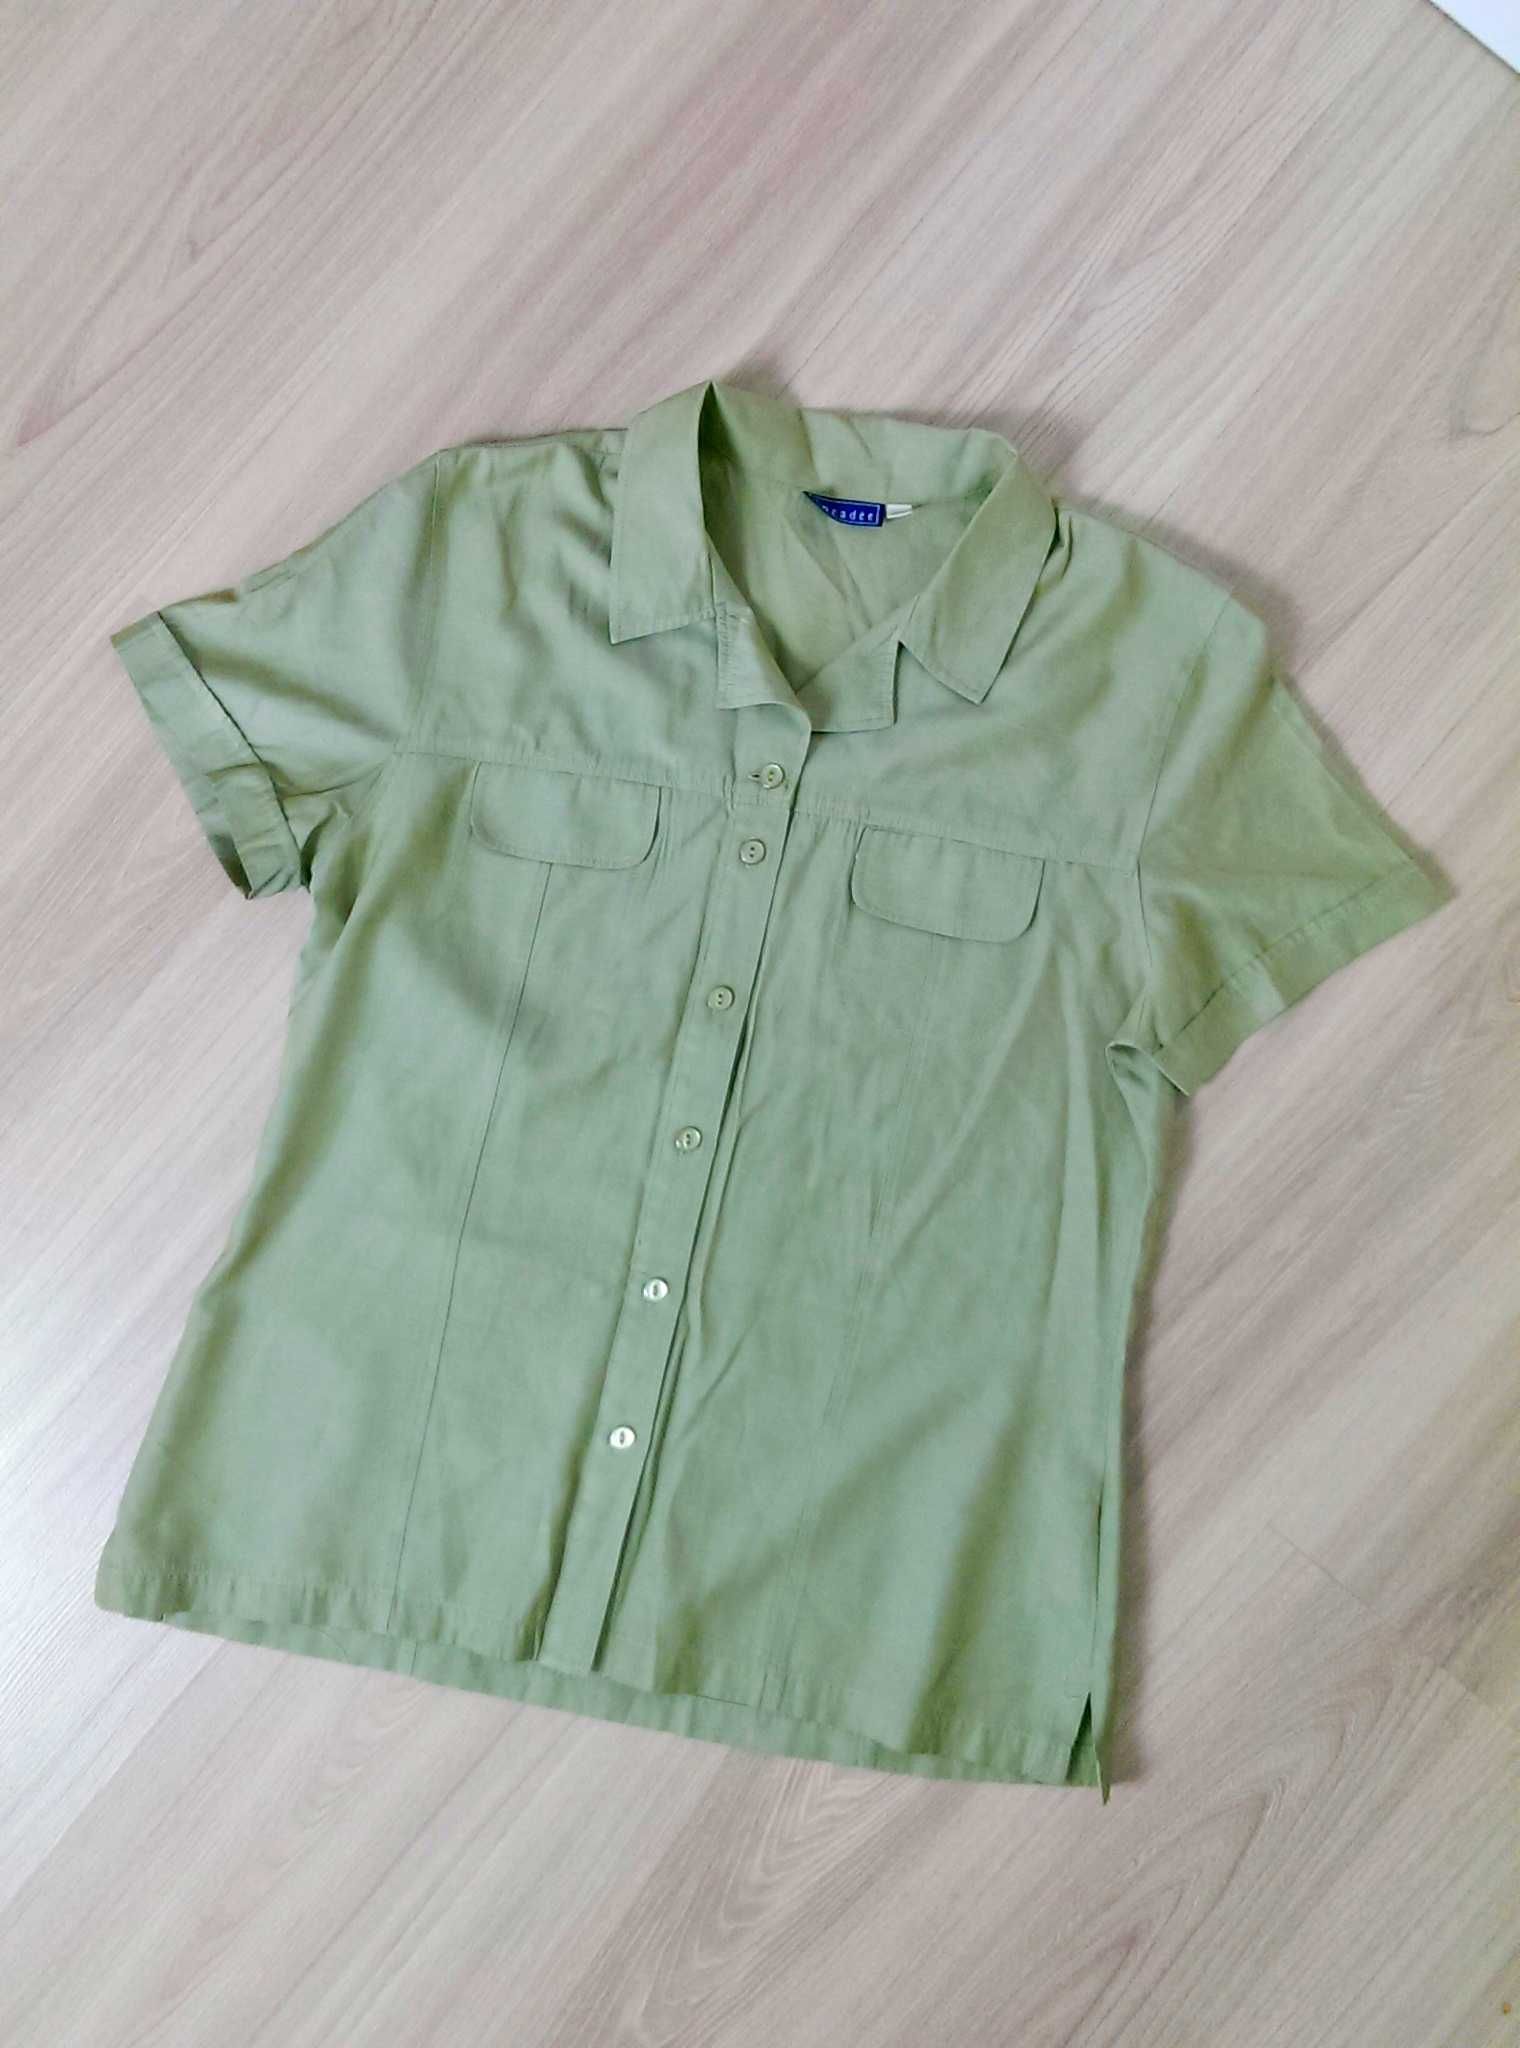 Damska koszula khaki zielona pastelowa krótki rękaw dekolt Encadee 40